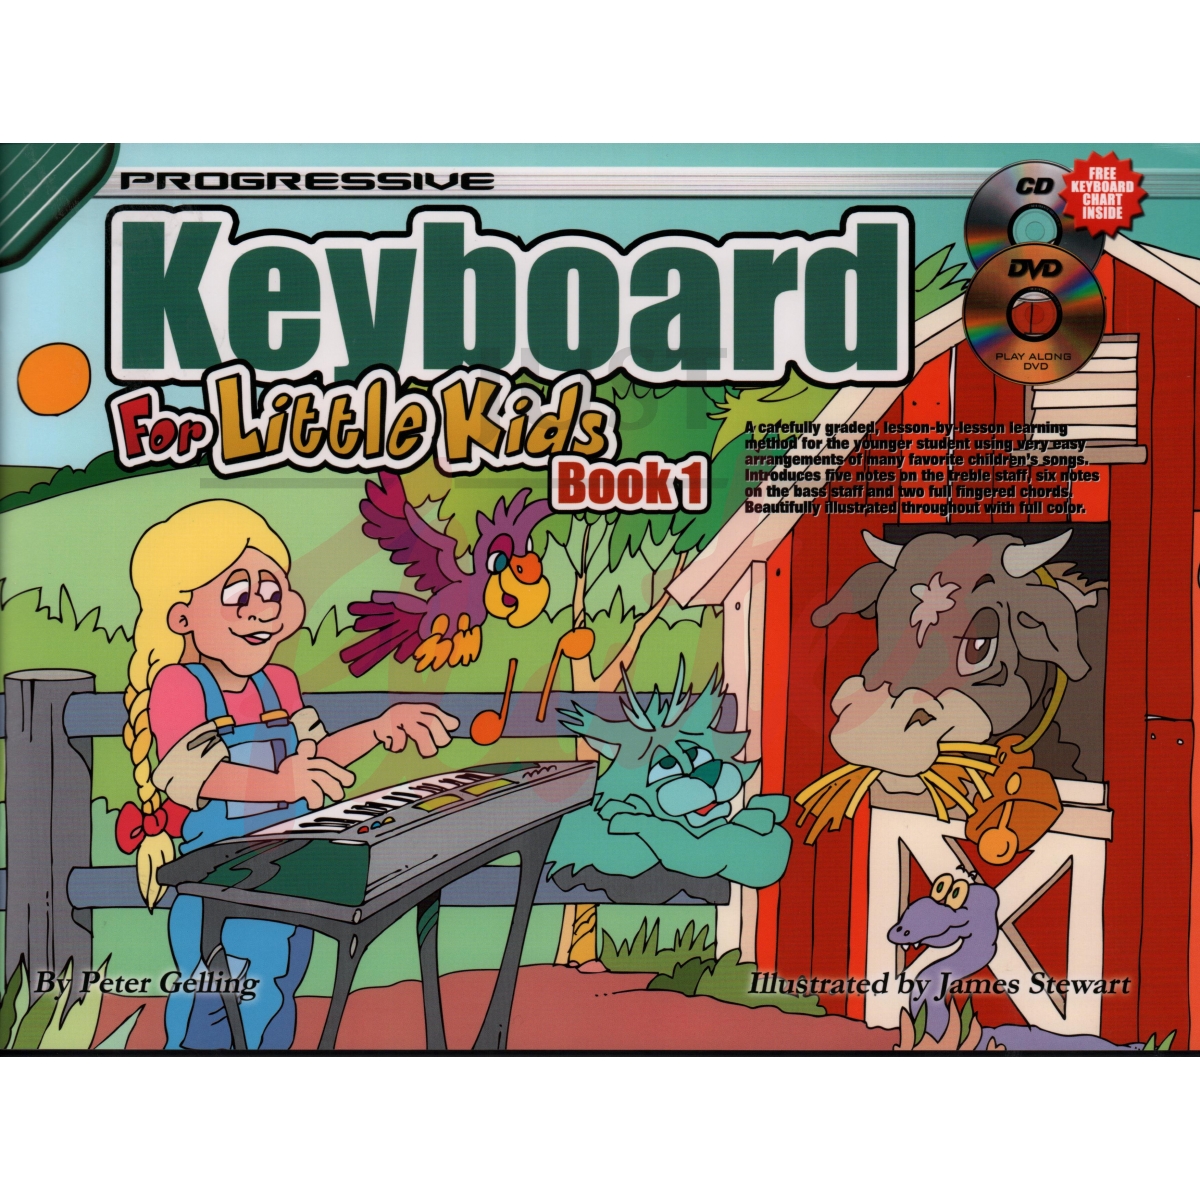 Progressive Keyboard Method for Little Kids Book 1